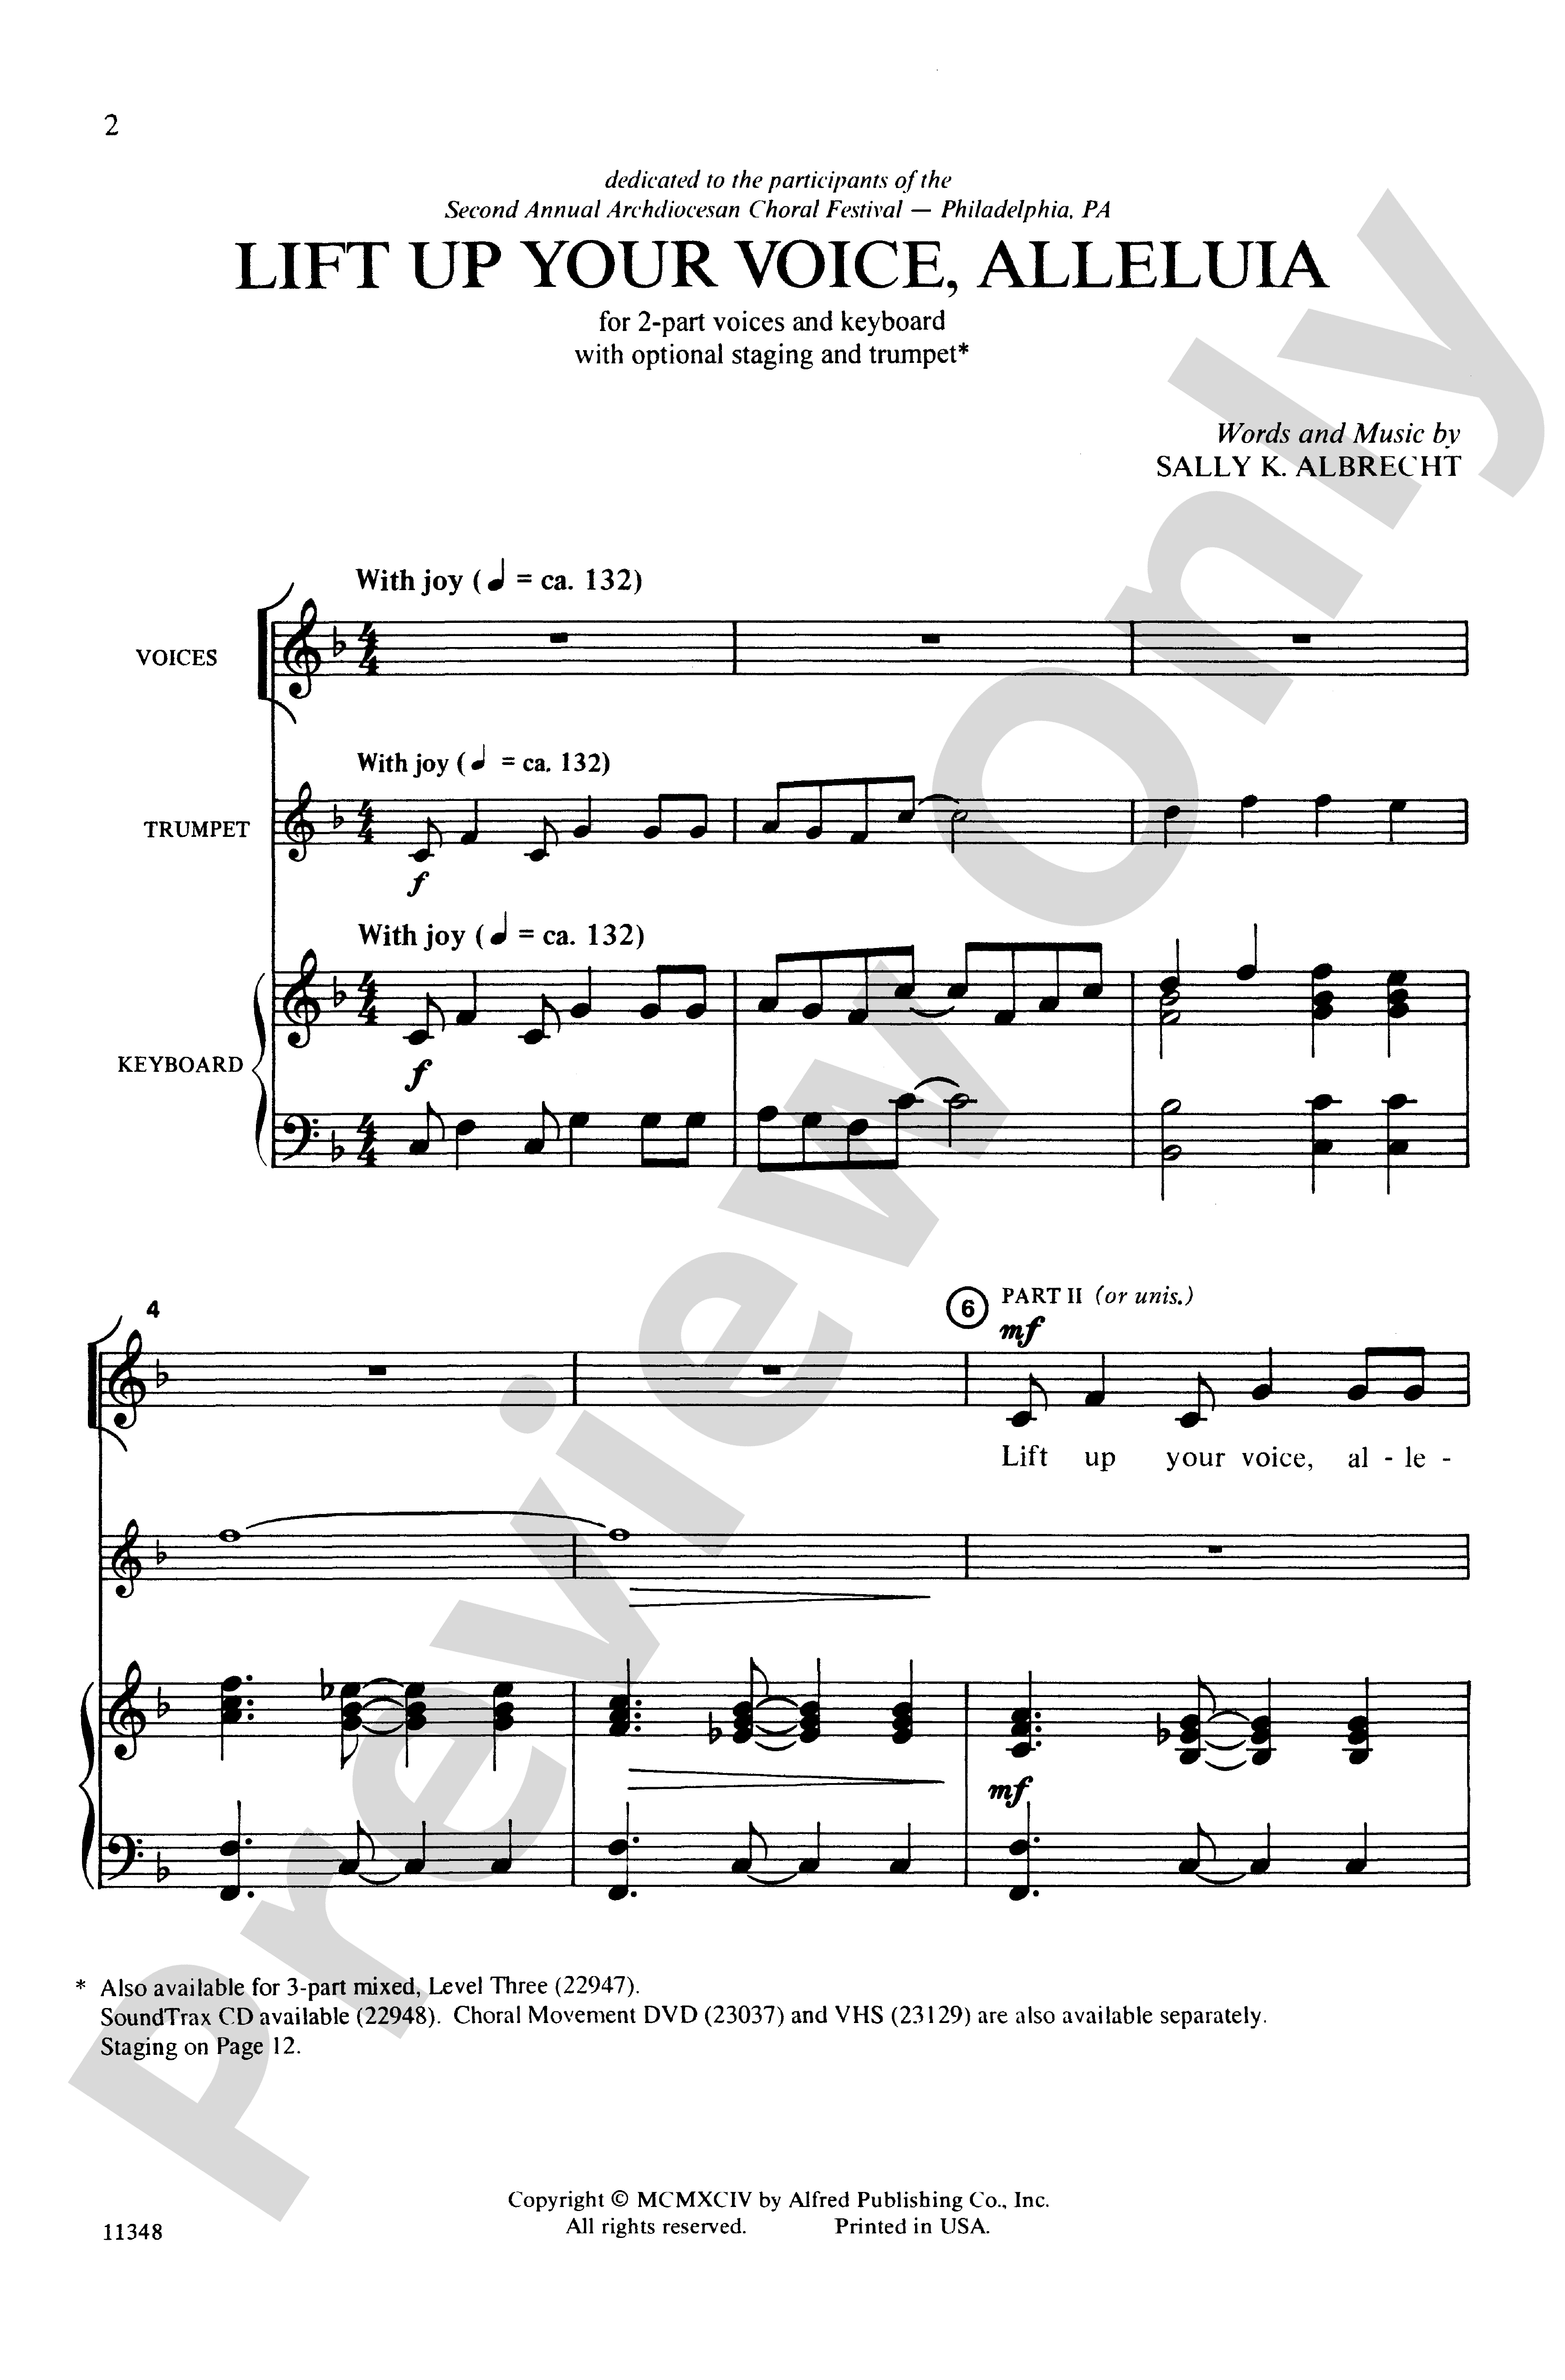 Lift Up Your Voice Alleluia 2 Part Choral Octavo Sally K Albrecht Digital Sheet Music Download 7995